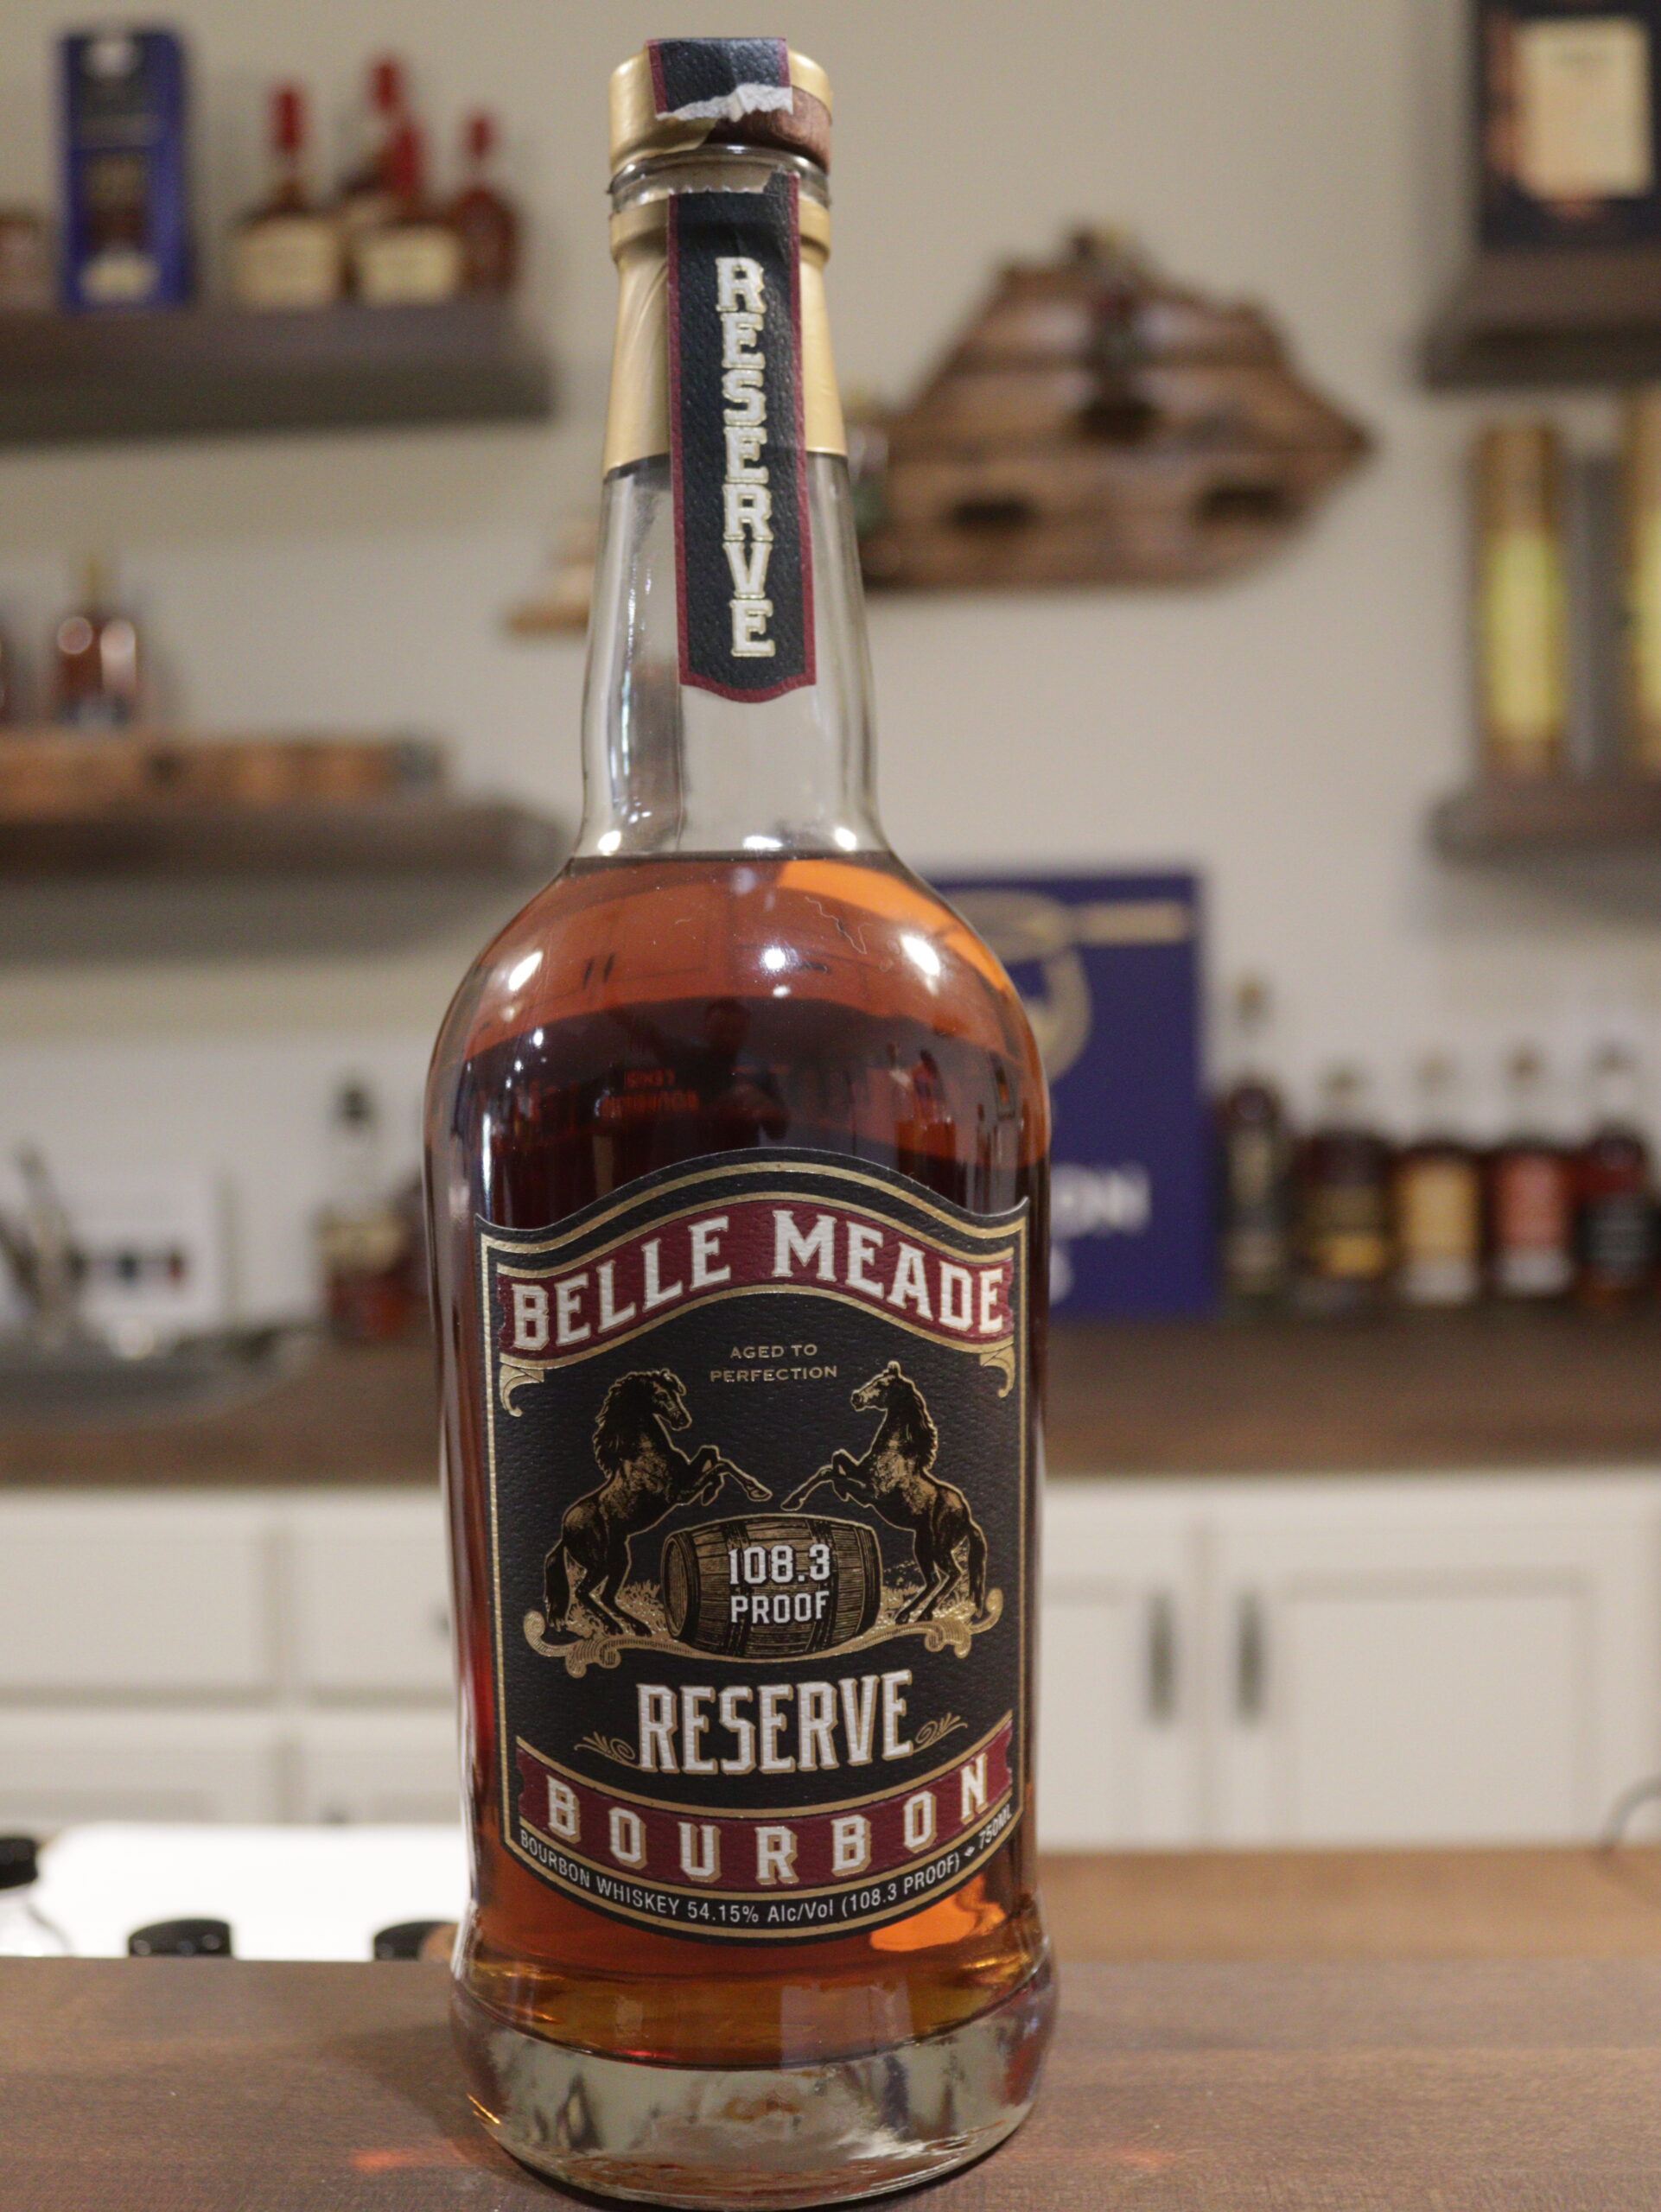 Belle Meade Reserve Bourbon sitting on a bar